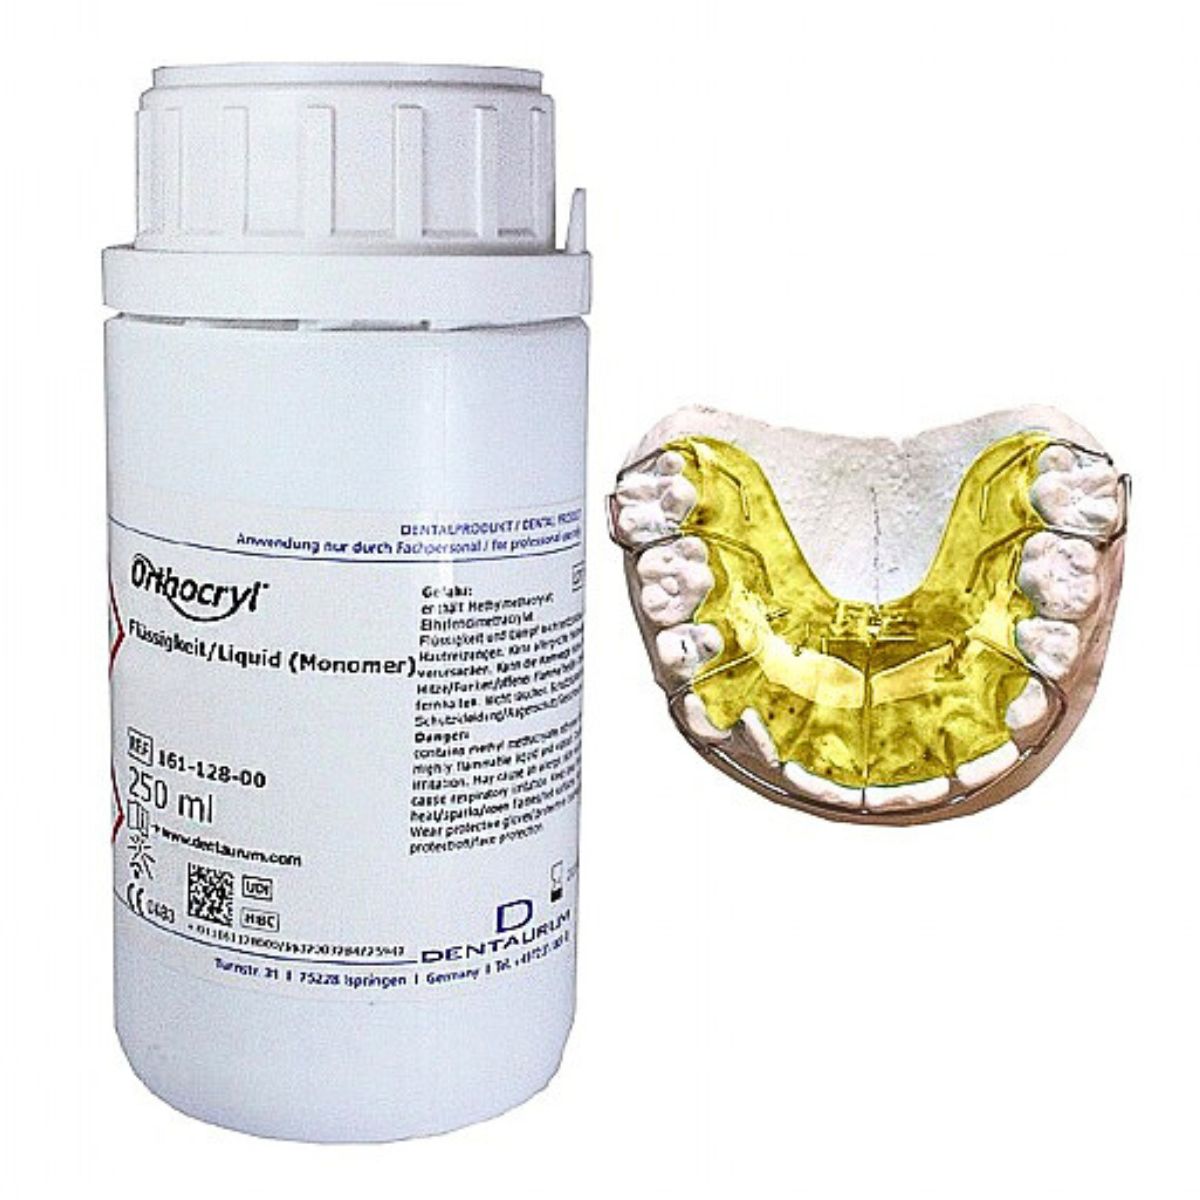 Dentaurum Orthocryl Yellow Acrylic Liquid 250ml